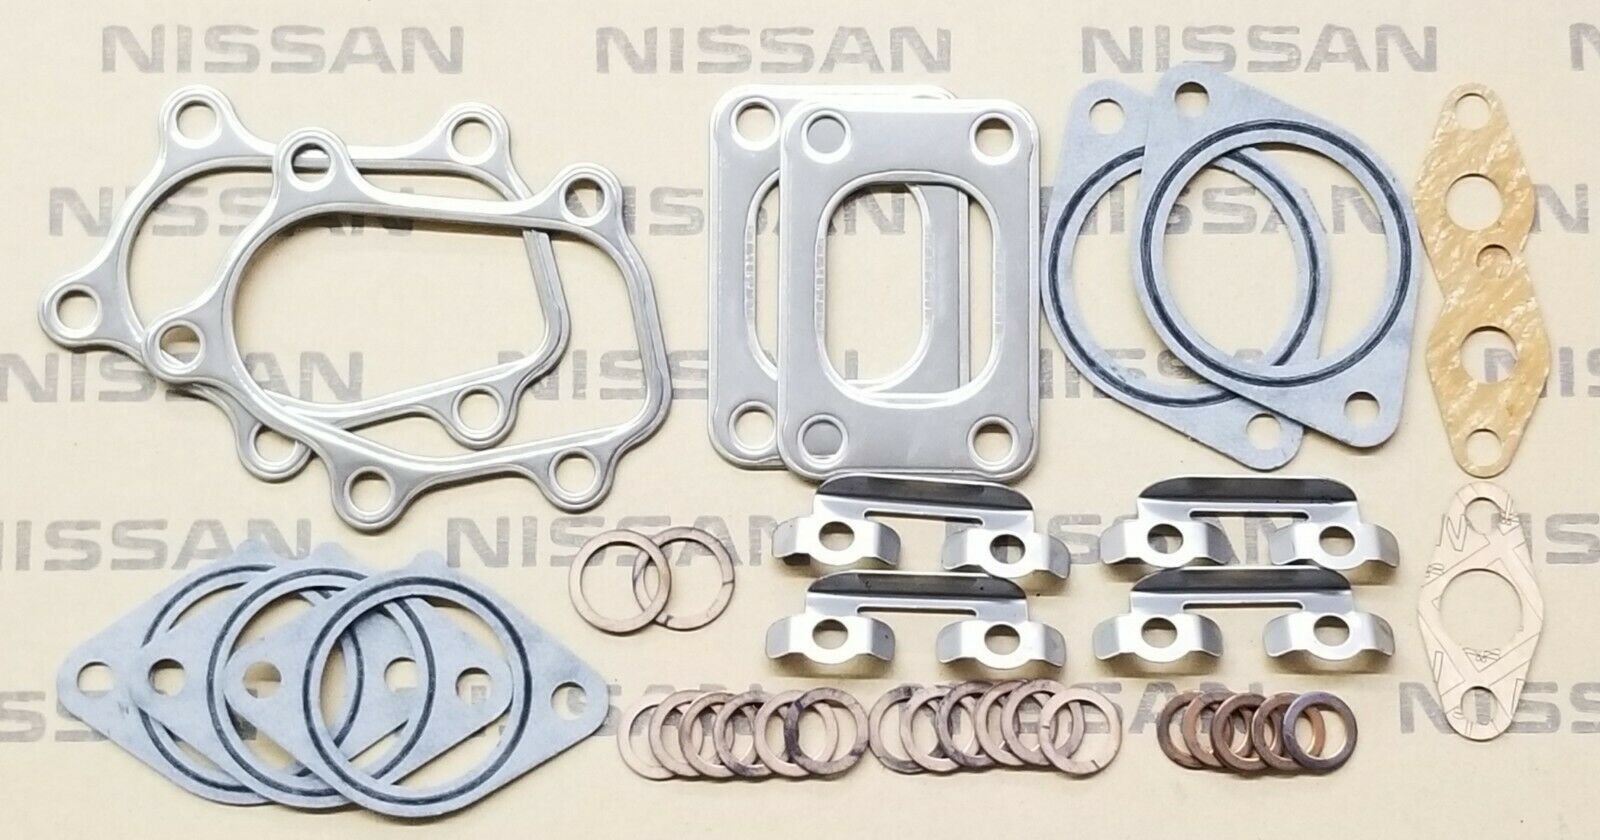 Nissan OEM Nismo/N1 Turbo Charger Gasket Kit - Nissan Skyline R32 R33 R34 GT-R